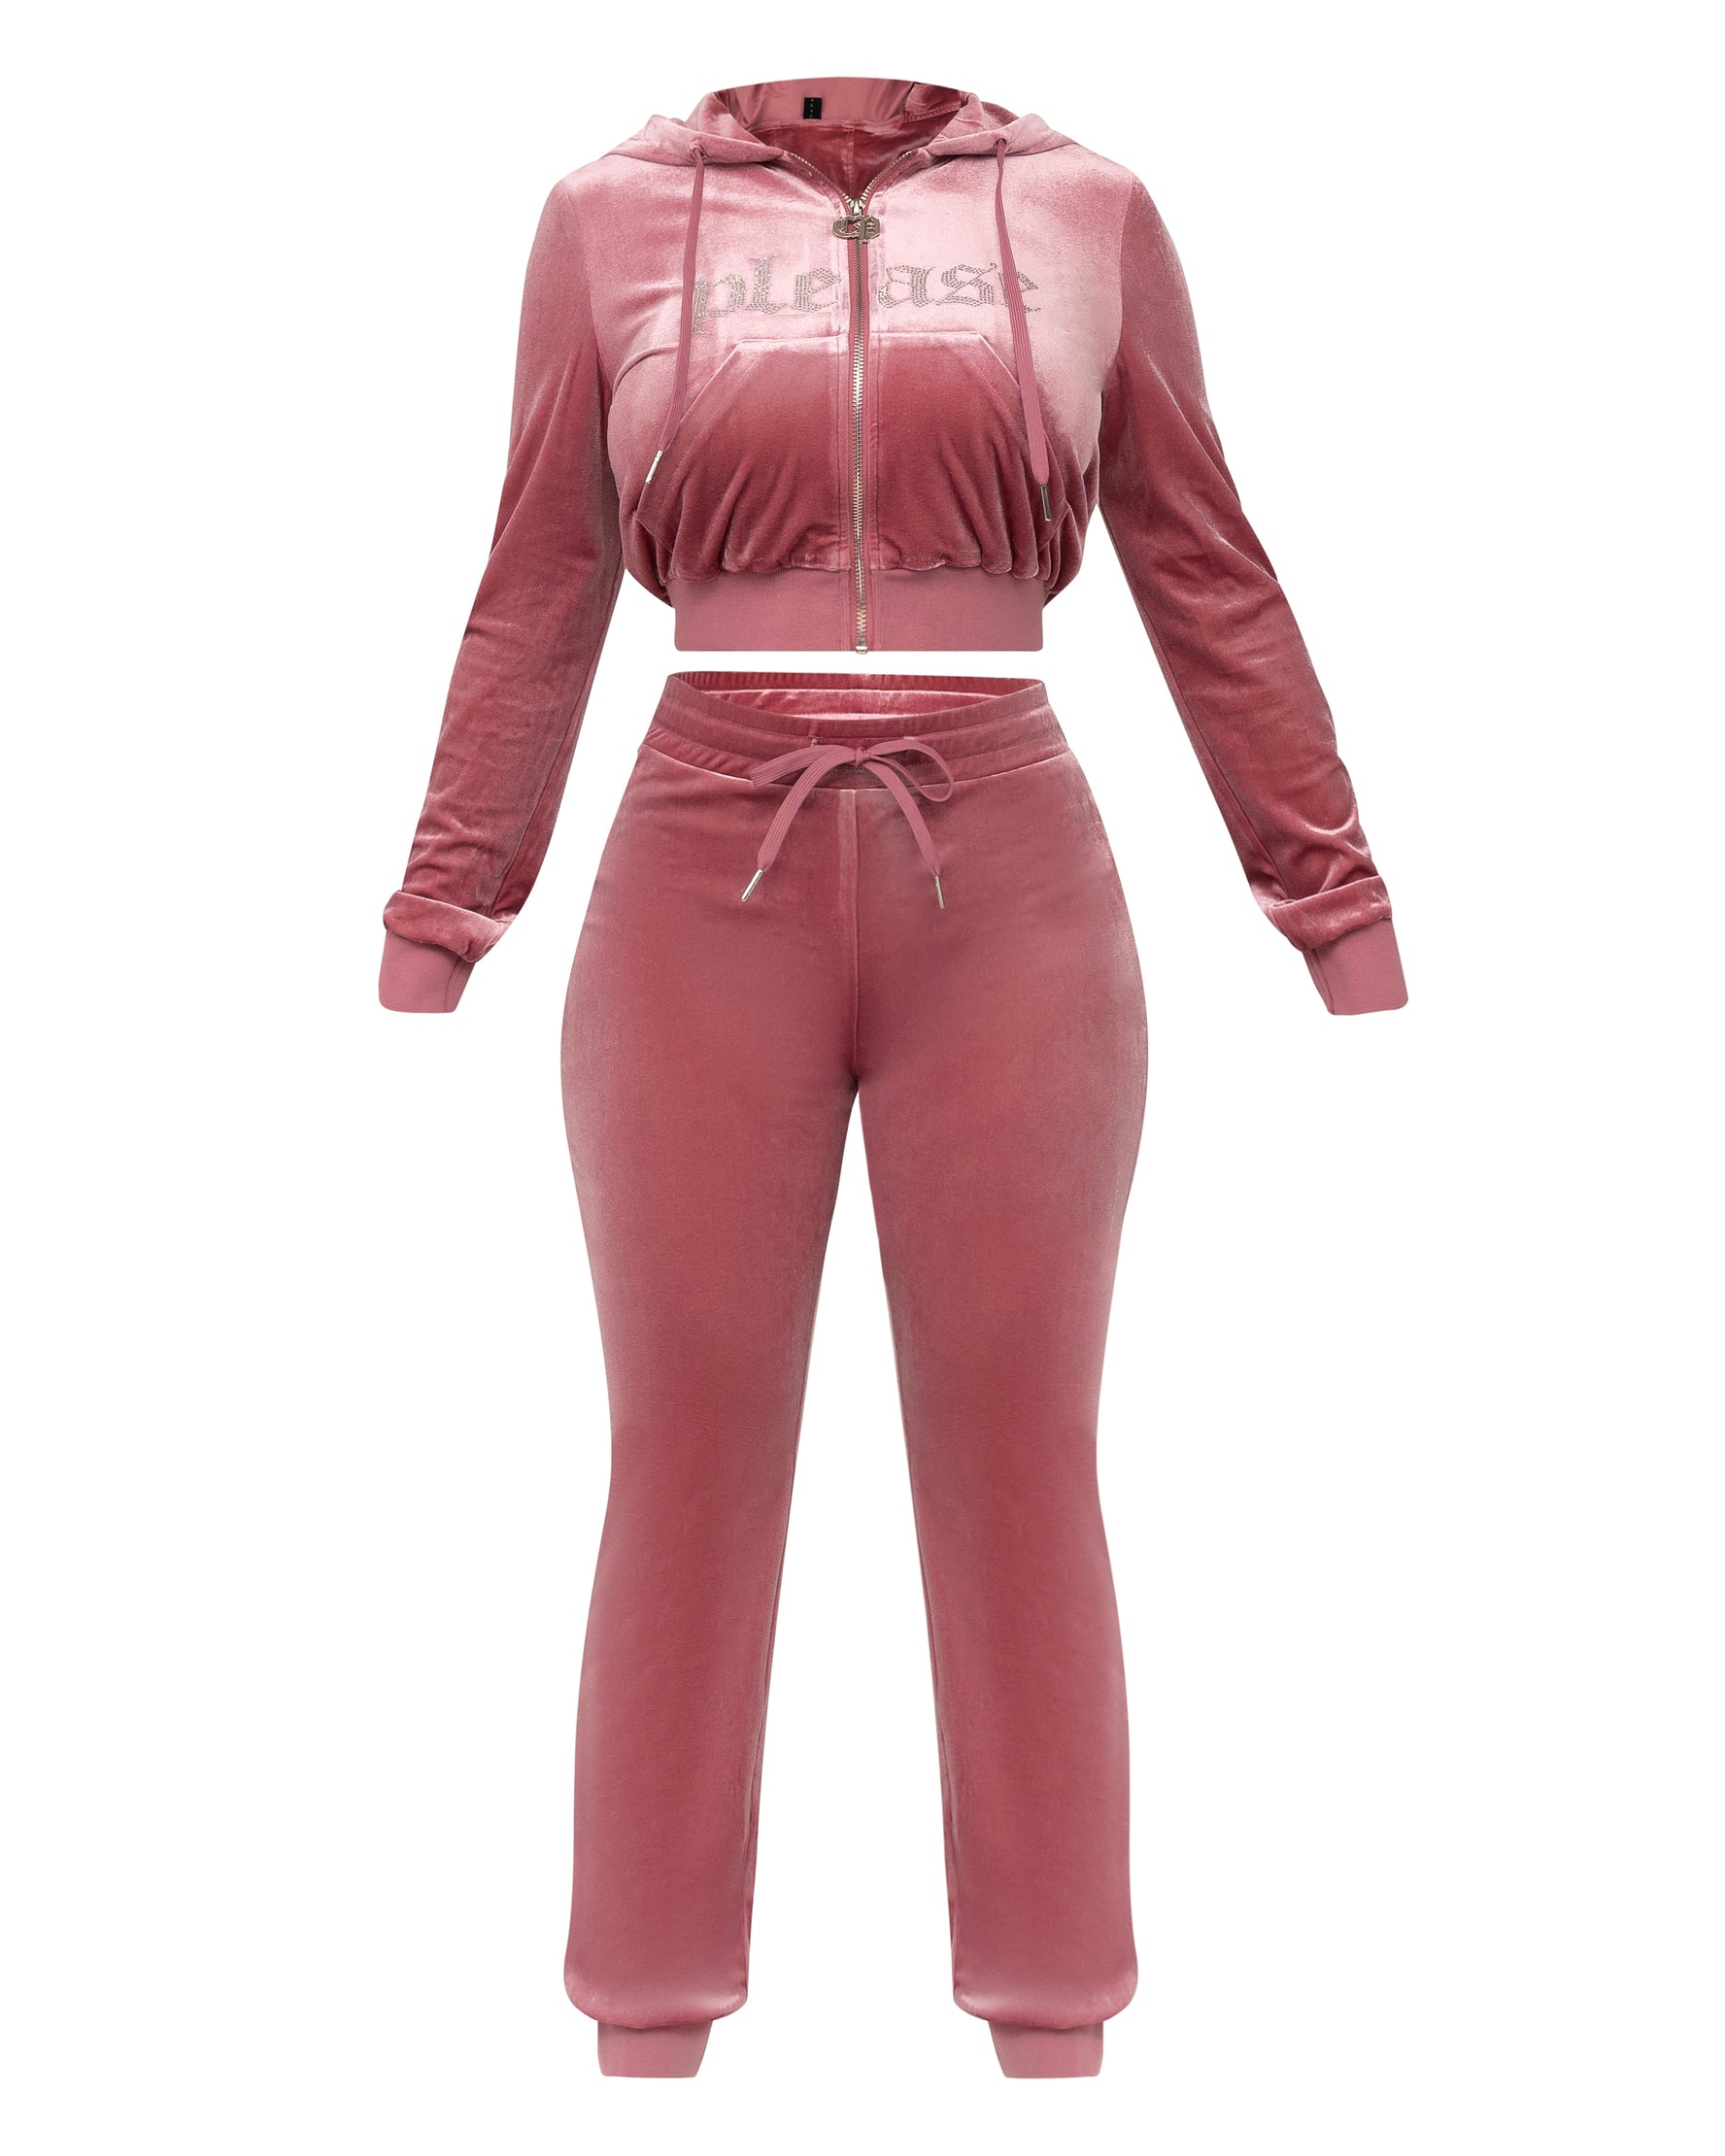 The Barbie Velour Set-Pink